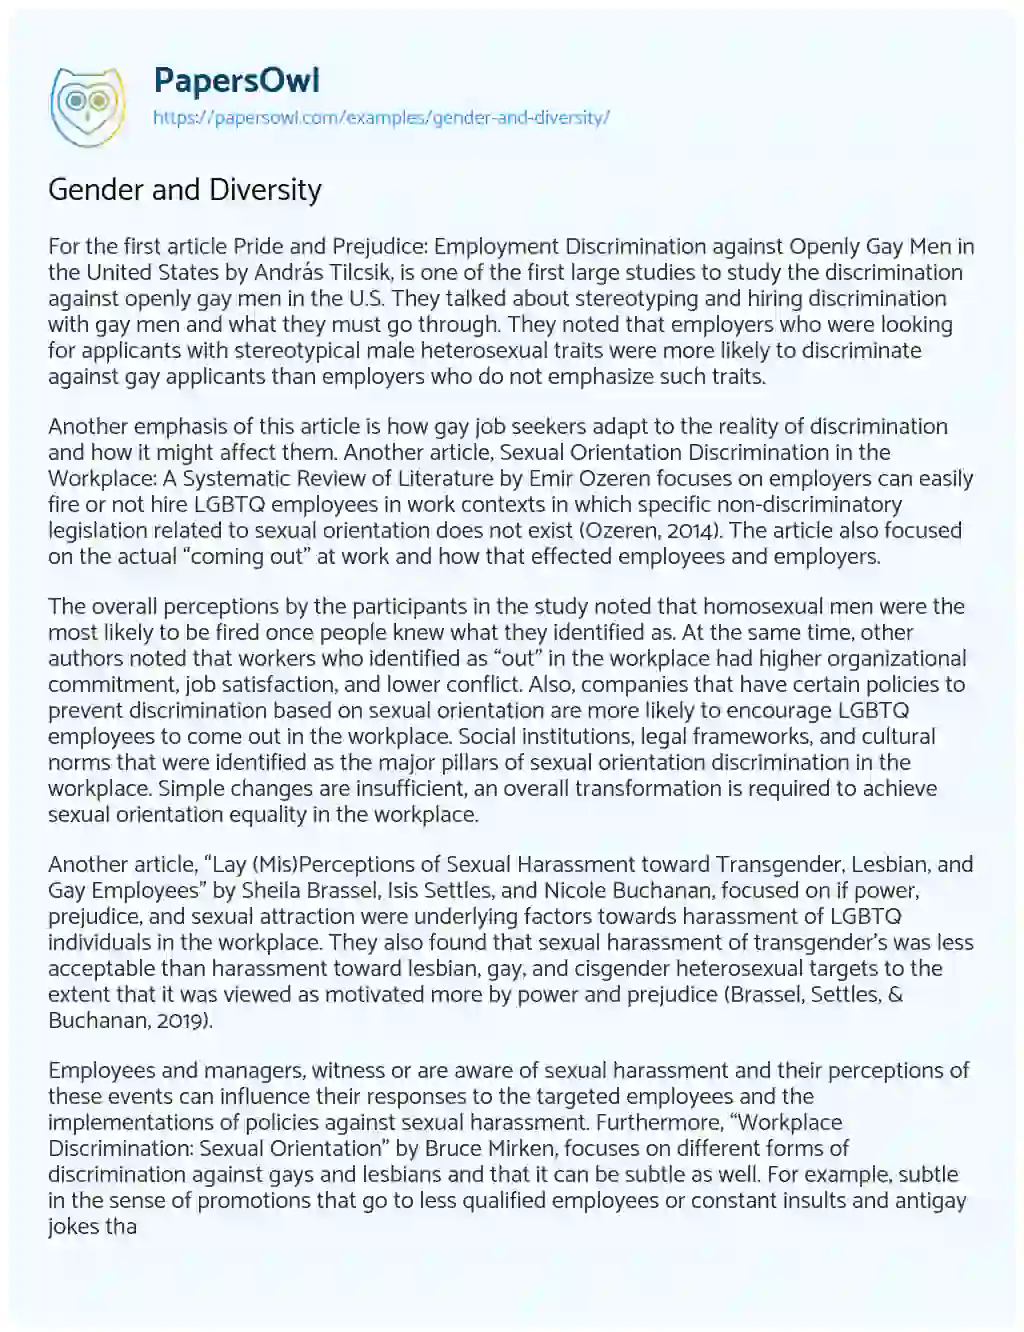 Essay on Gender and Diversity